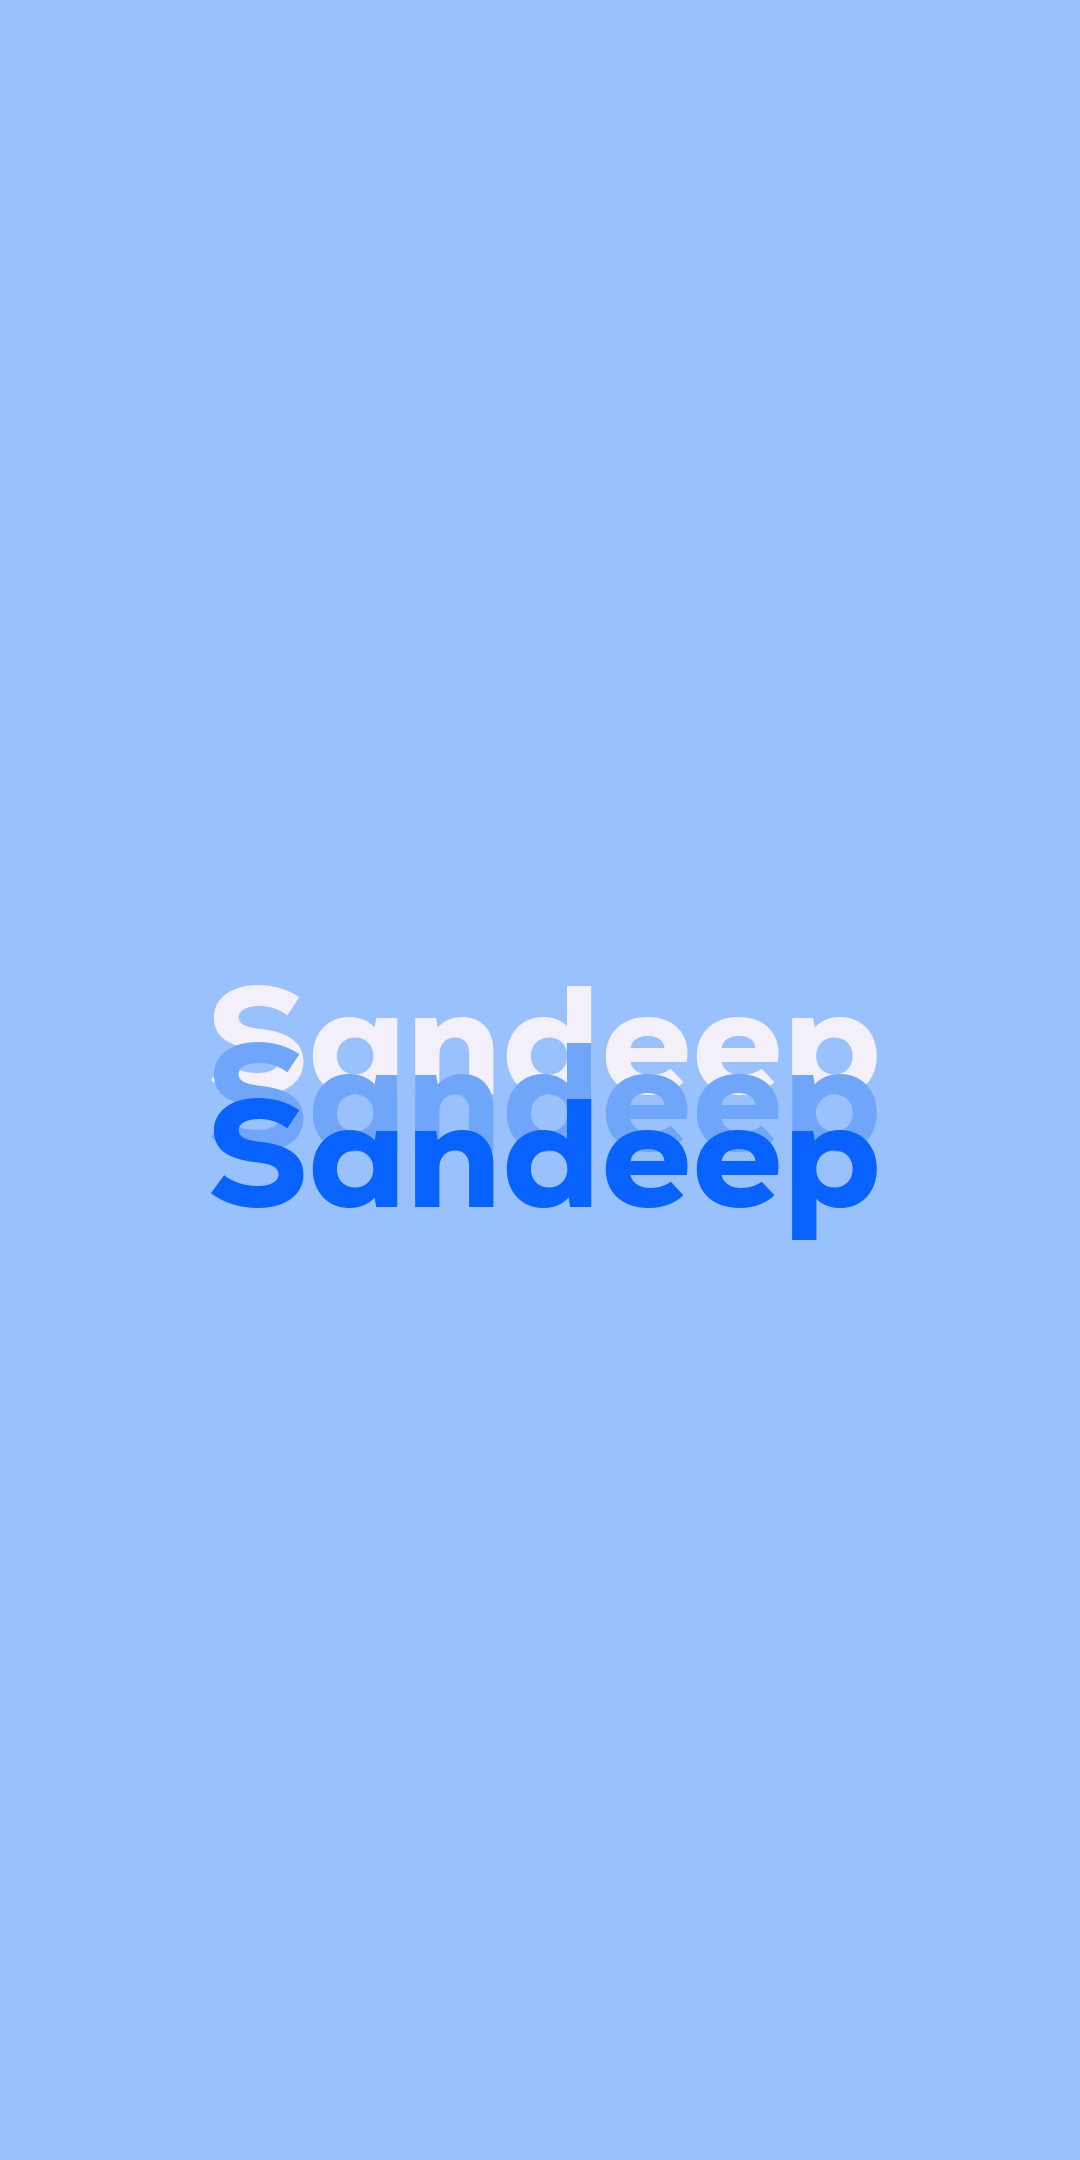 Sandeep Name Signature Style | S Signature Style | Signature Style of My Name  Sandeep - YouTube